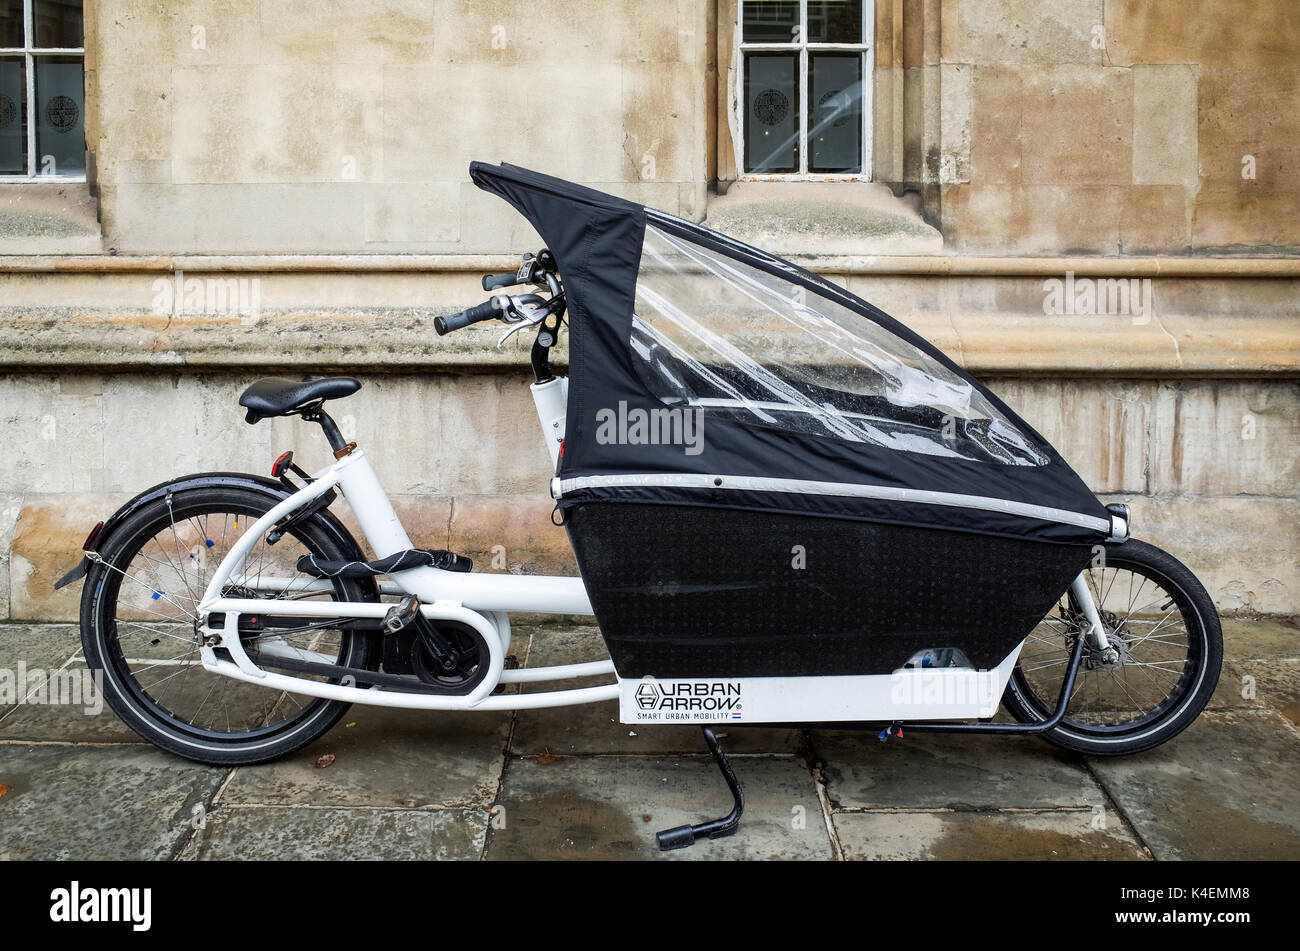 Cargo Bike - a Streamlined Urban Arrow Electric assist Cargo Bike parked in central Cambridge UK Stock Photo